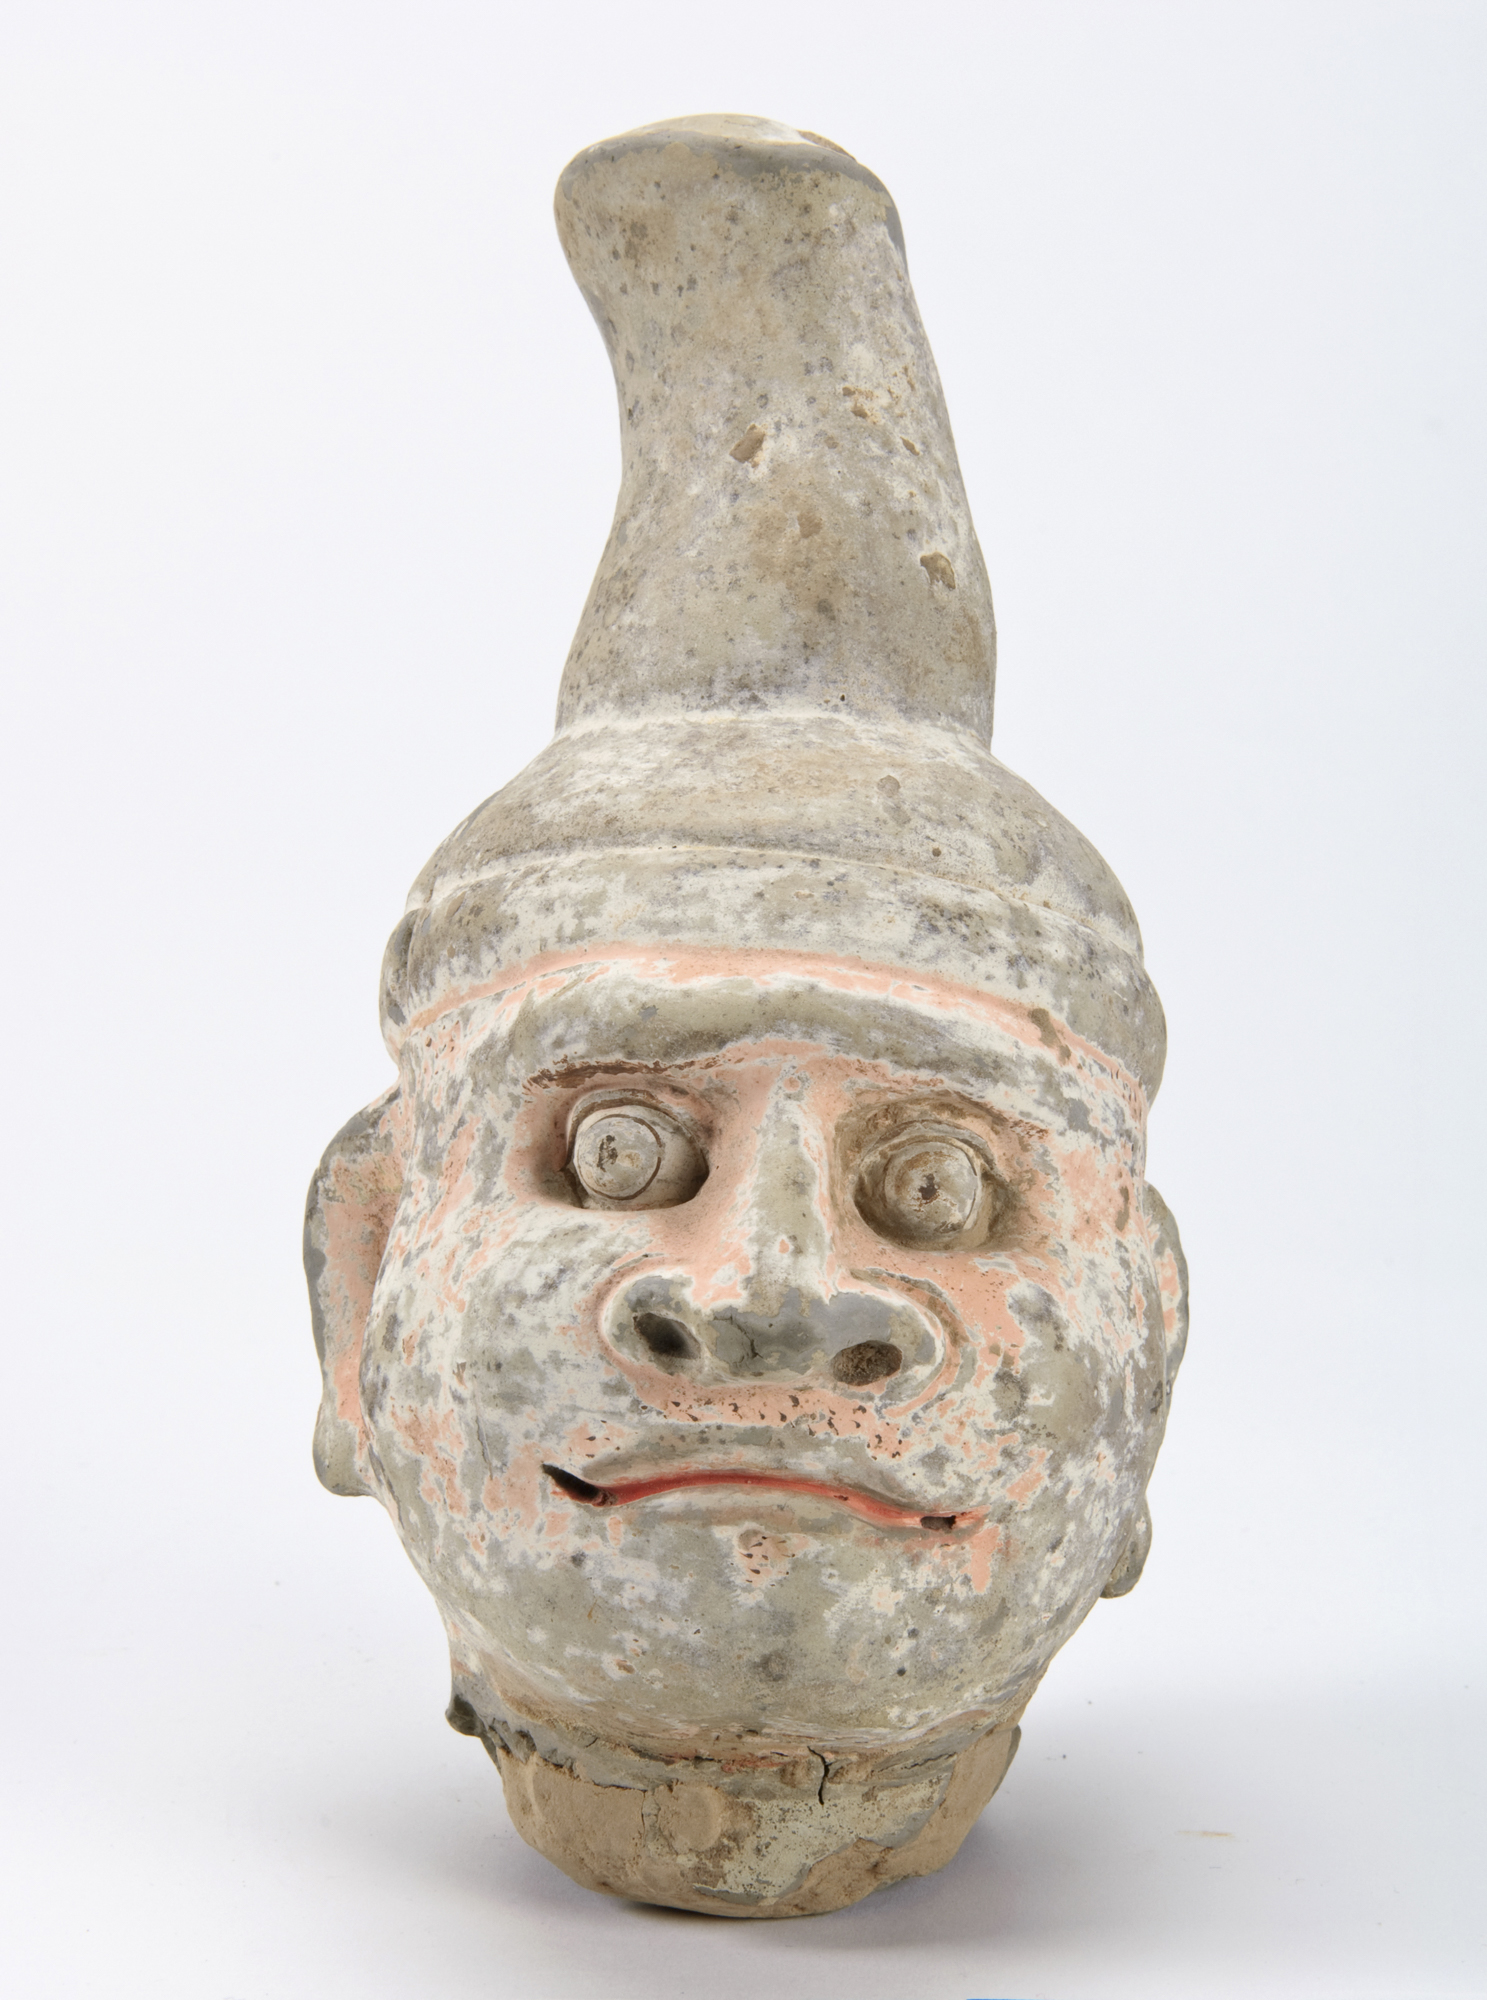 clay head sculpture of a man